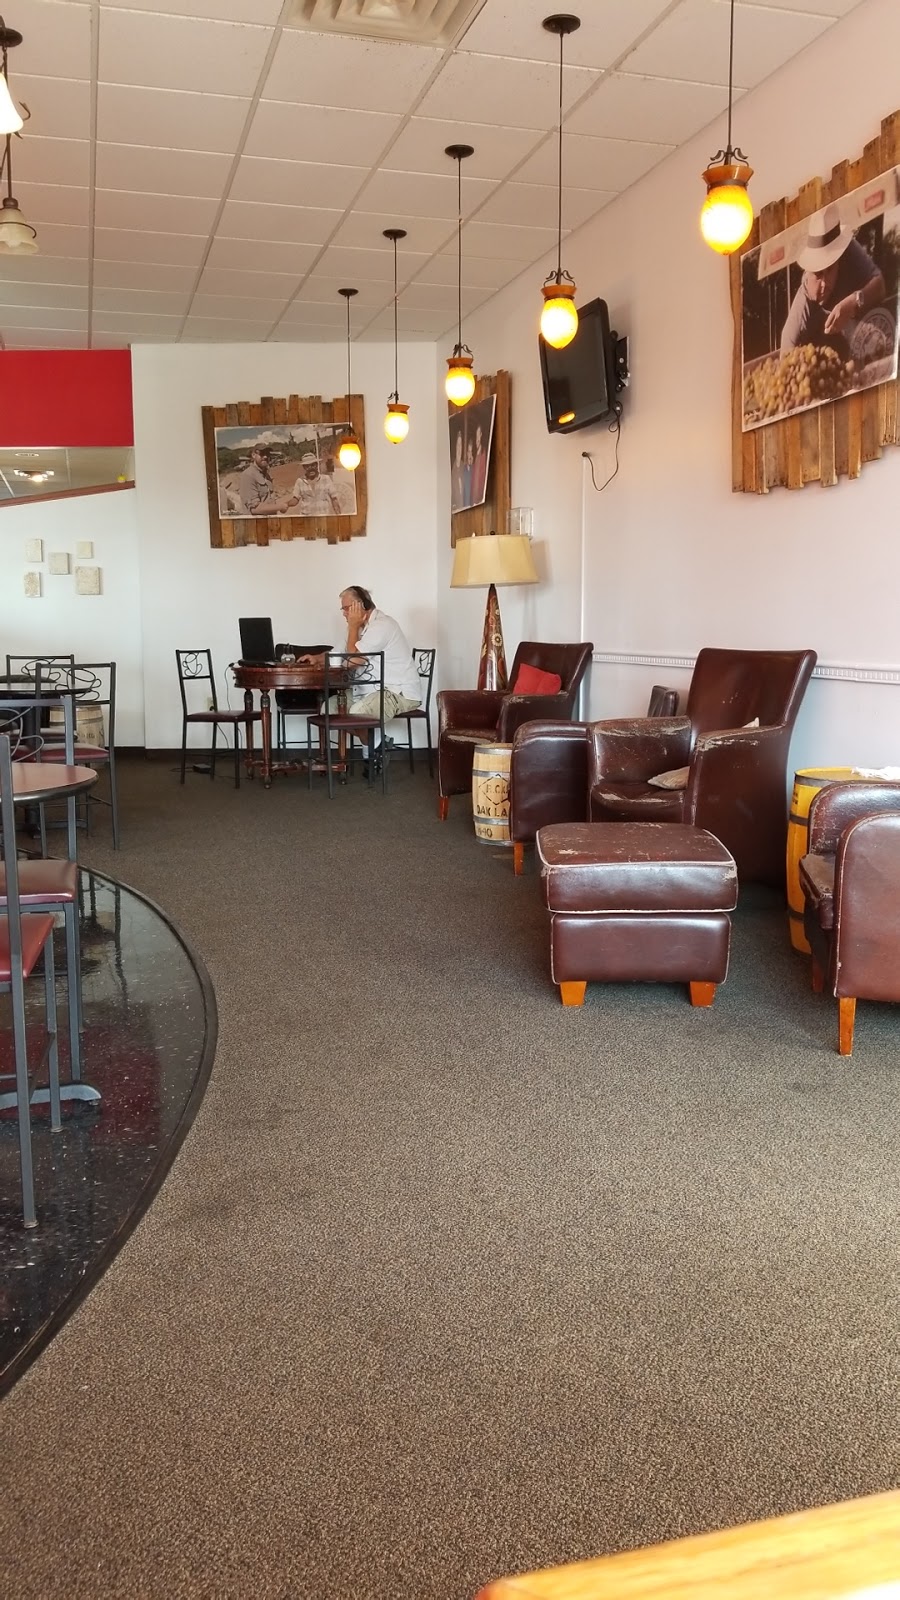 Boston Stoker Coffee Co. | 8321 N Main St, Dayton, OH 45415 | Phone: (937) 890-2345